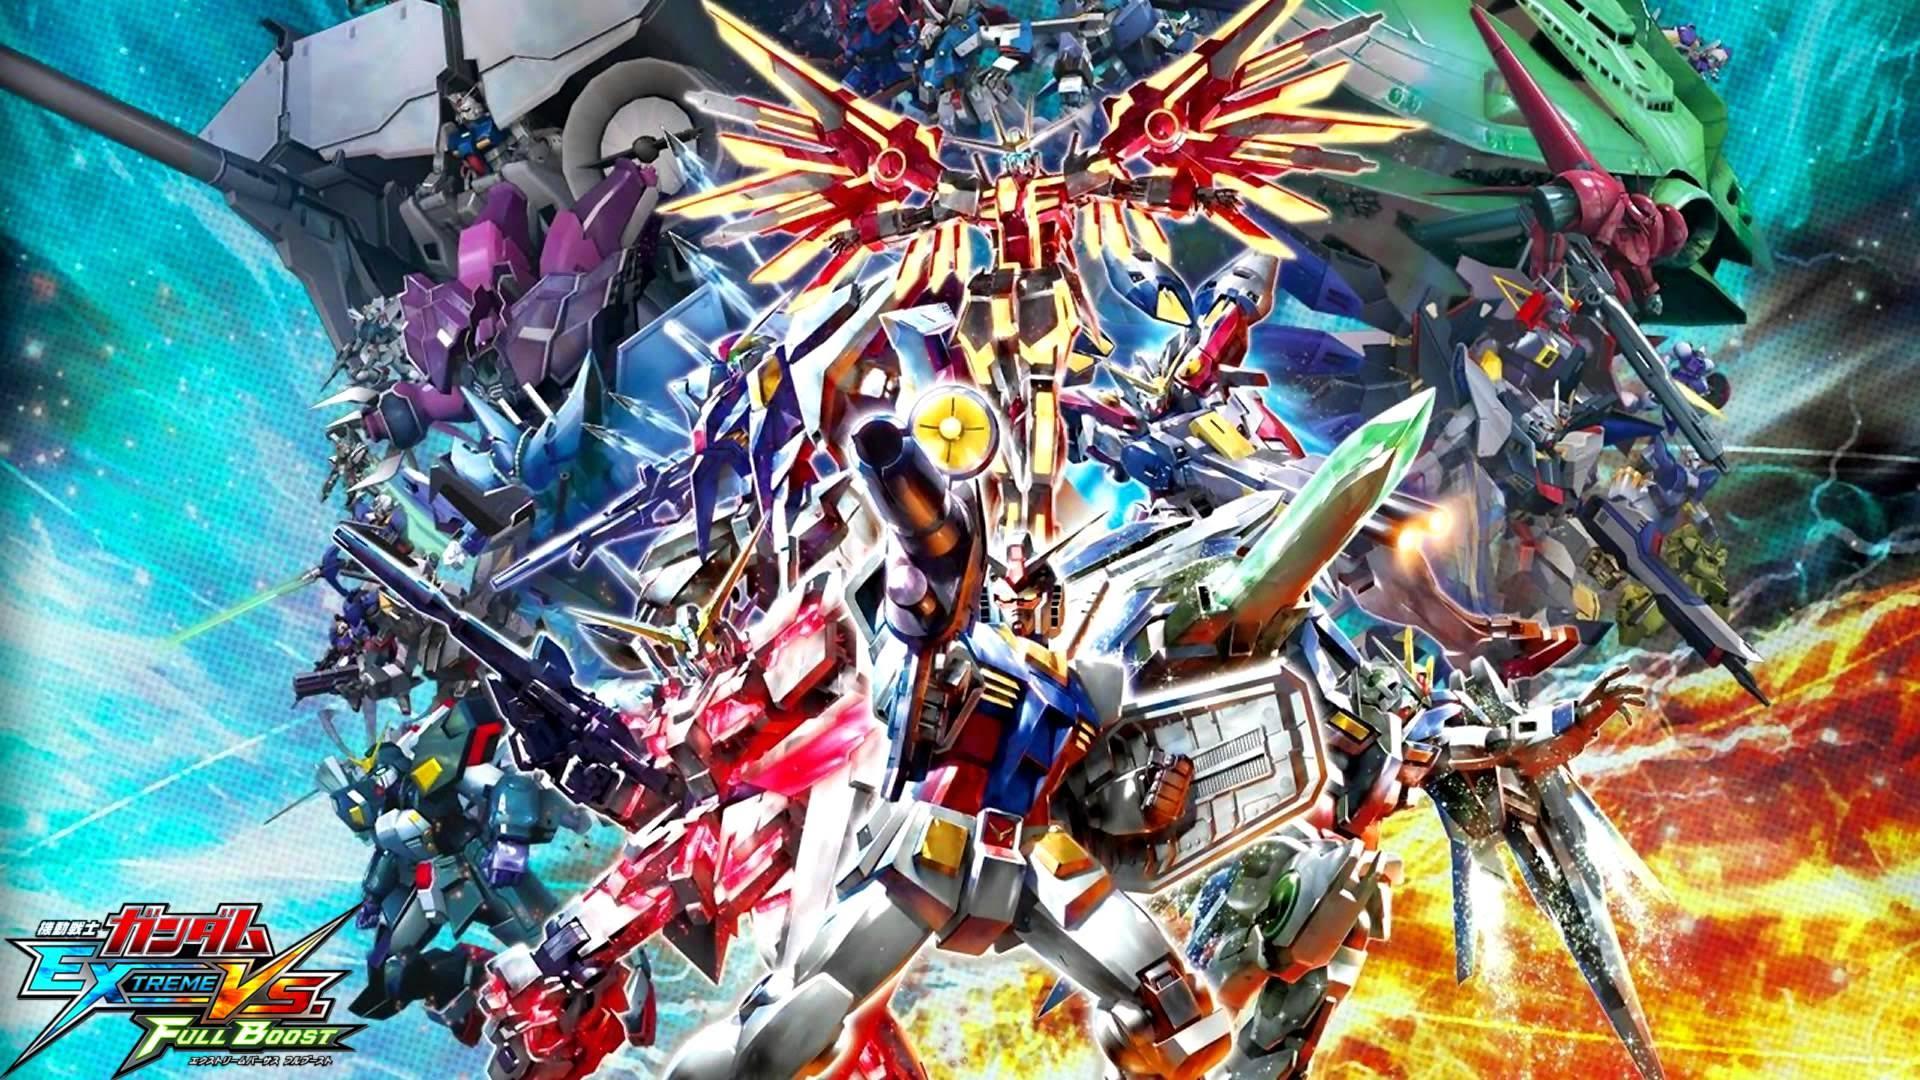 Mobile Suit Gundam: Extreme Vs. Full Boost- Gundam G Fighters